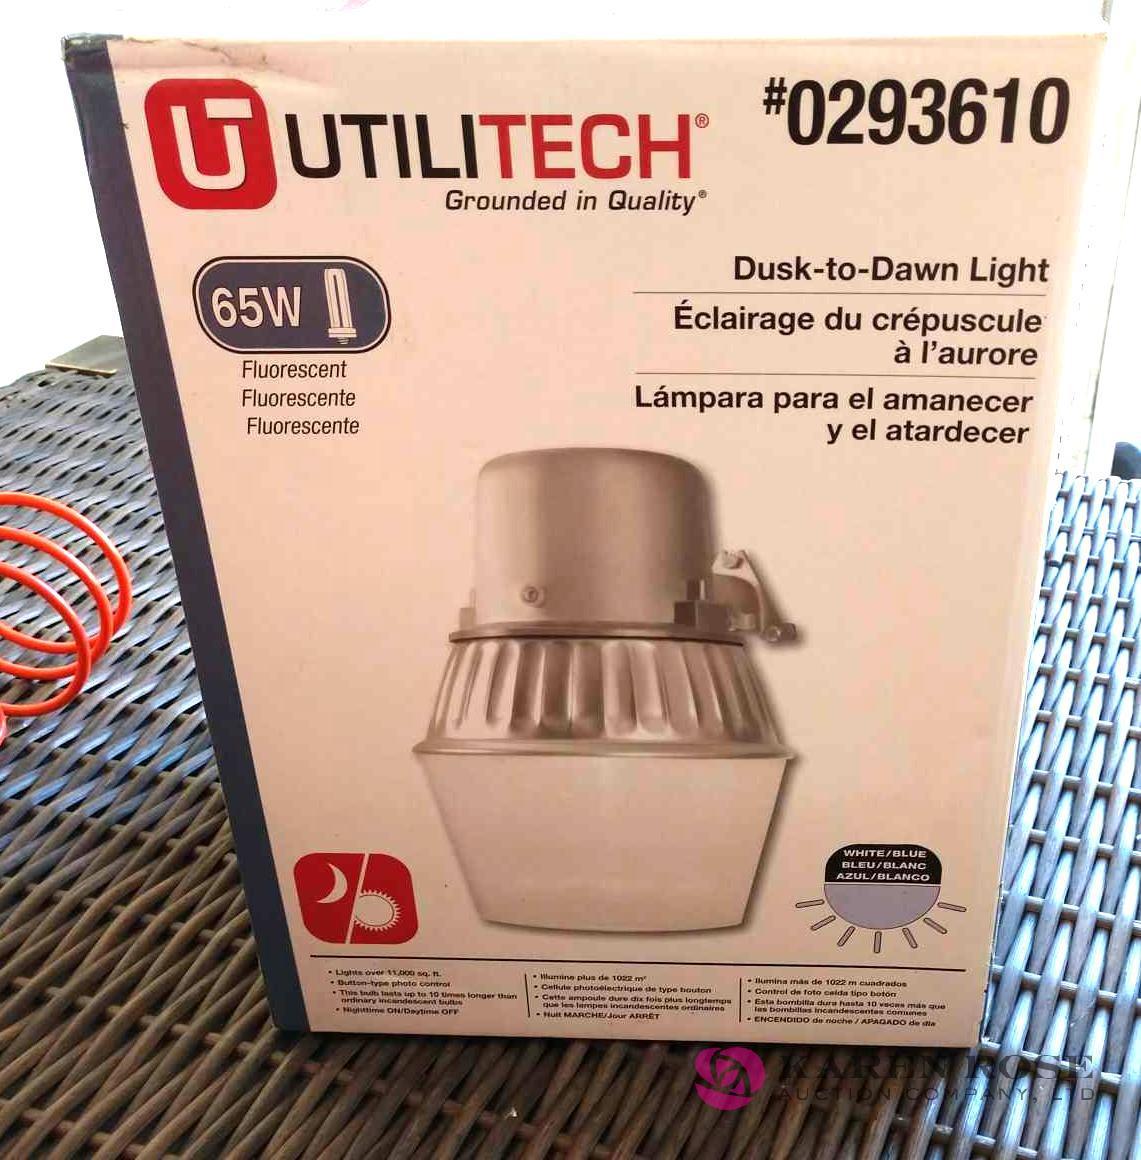 Dusk to Dawn utility light in box